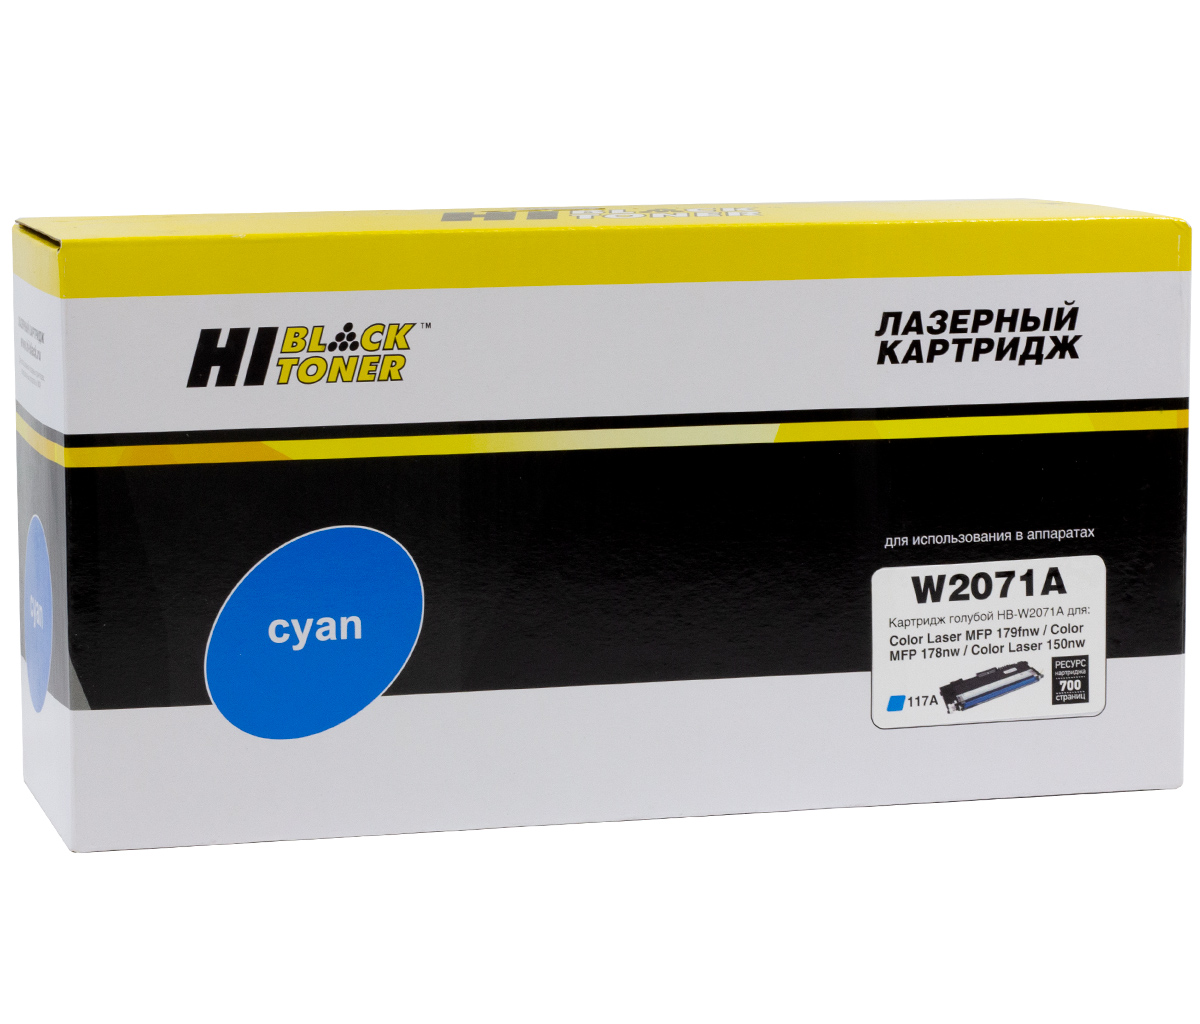 Тонер-картридж Hi-Black (HB-W2071A) для HP Color Laser 150a/ 150nw/ MFP 178nw/ 179fnw, (без чипа), голубой (700 стр.)